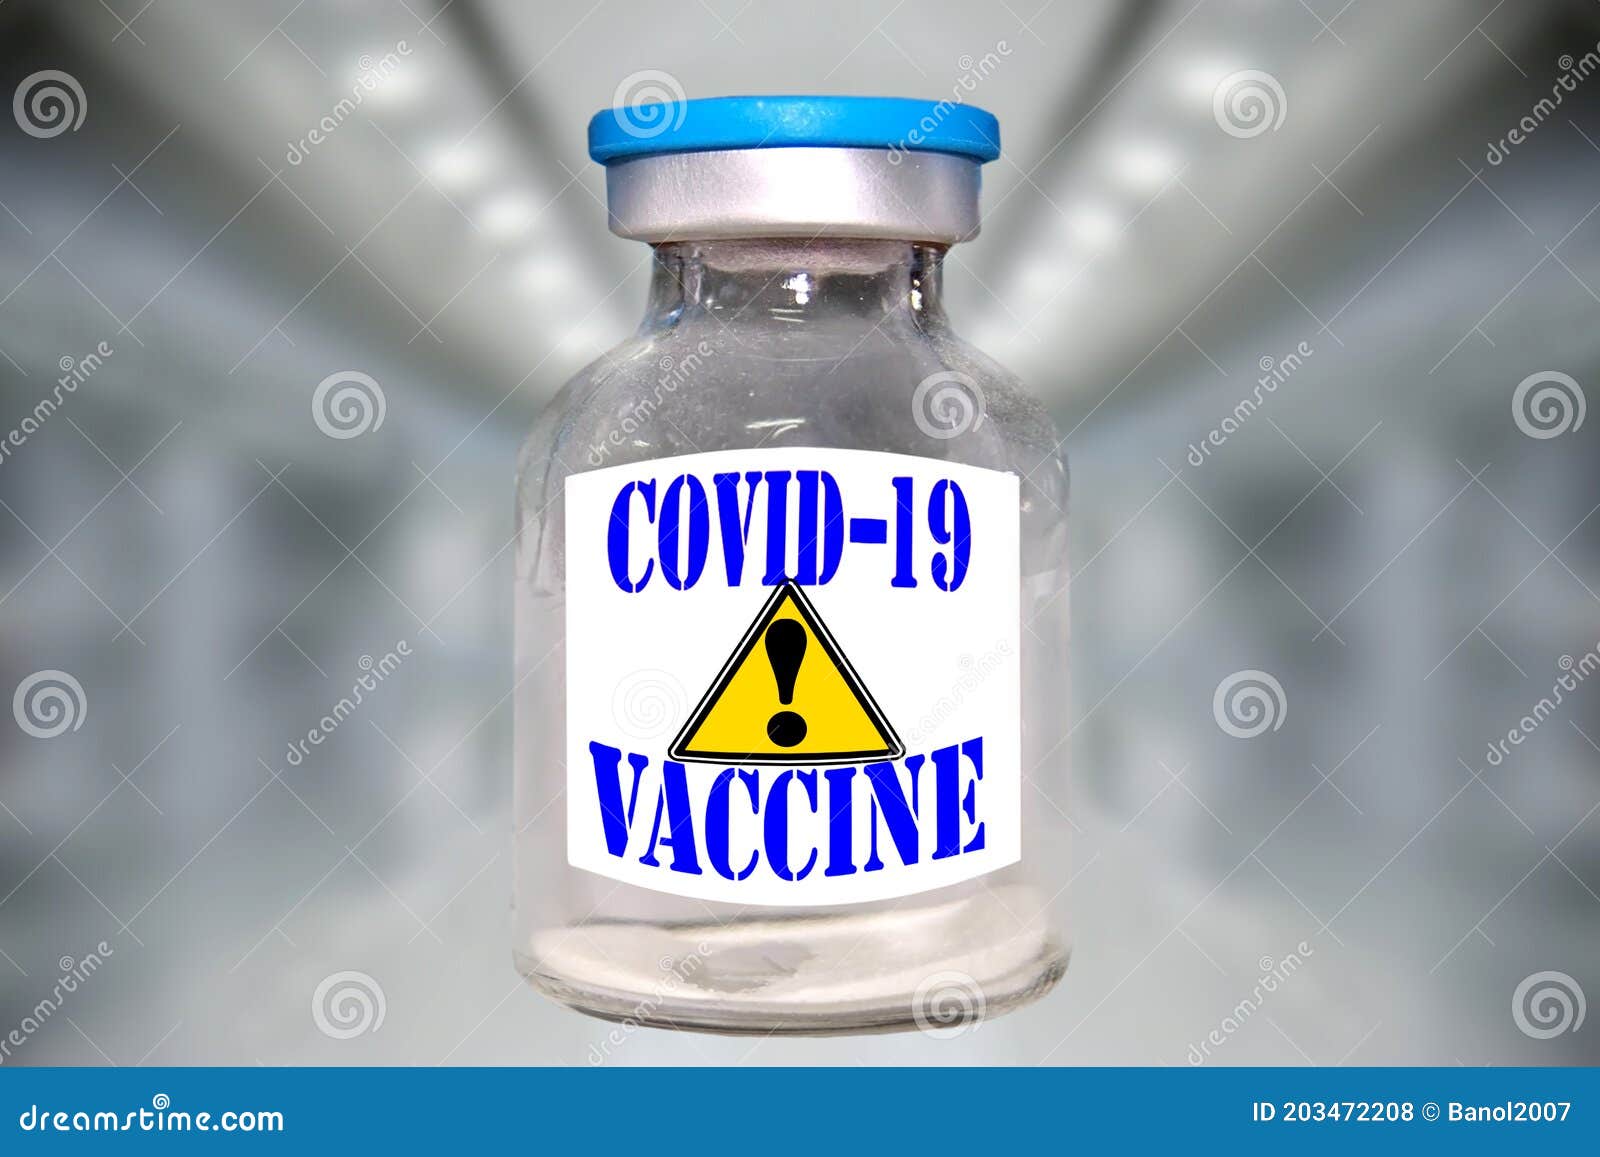 covid-19 vaccine precautions, fake; hospital background